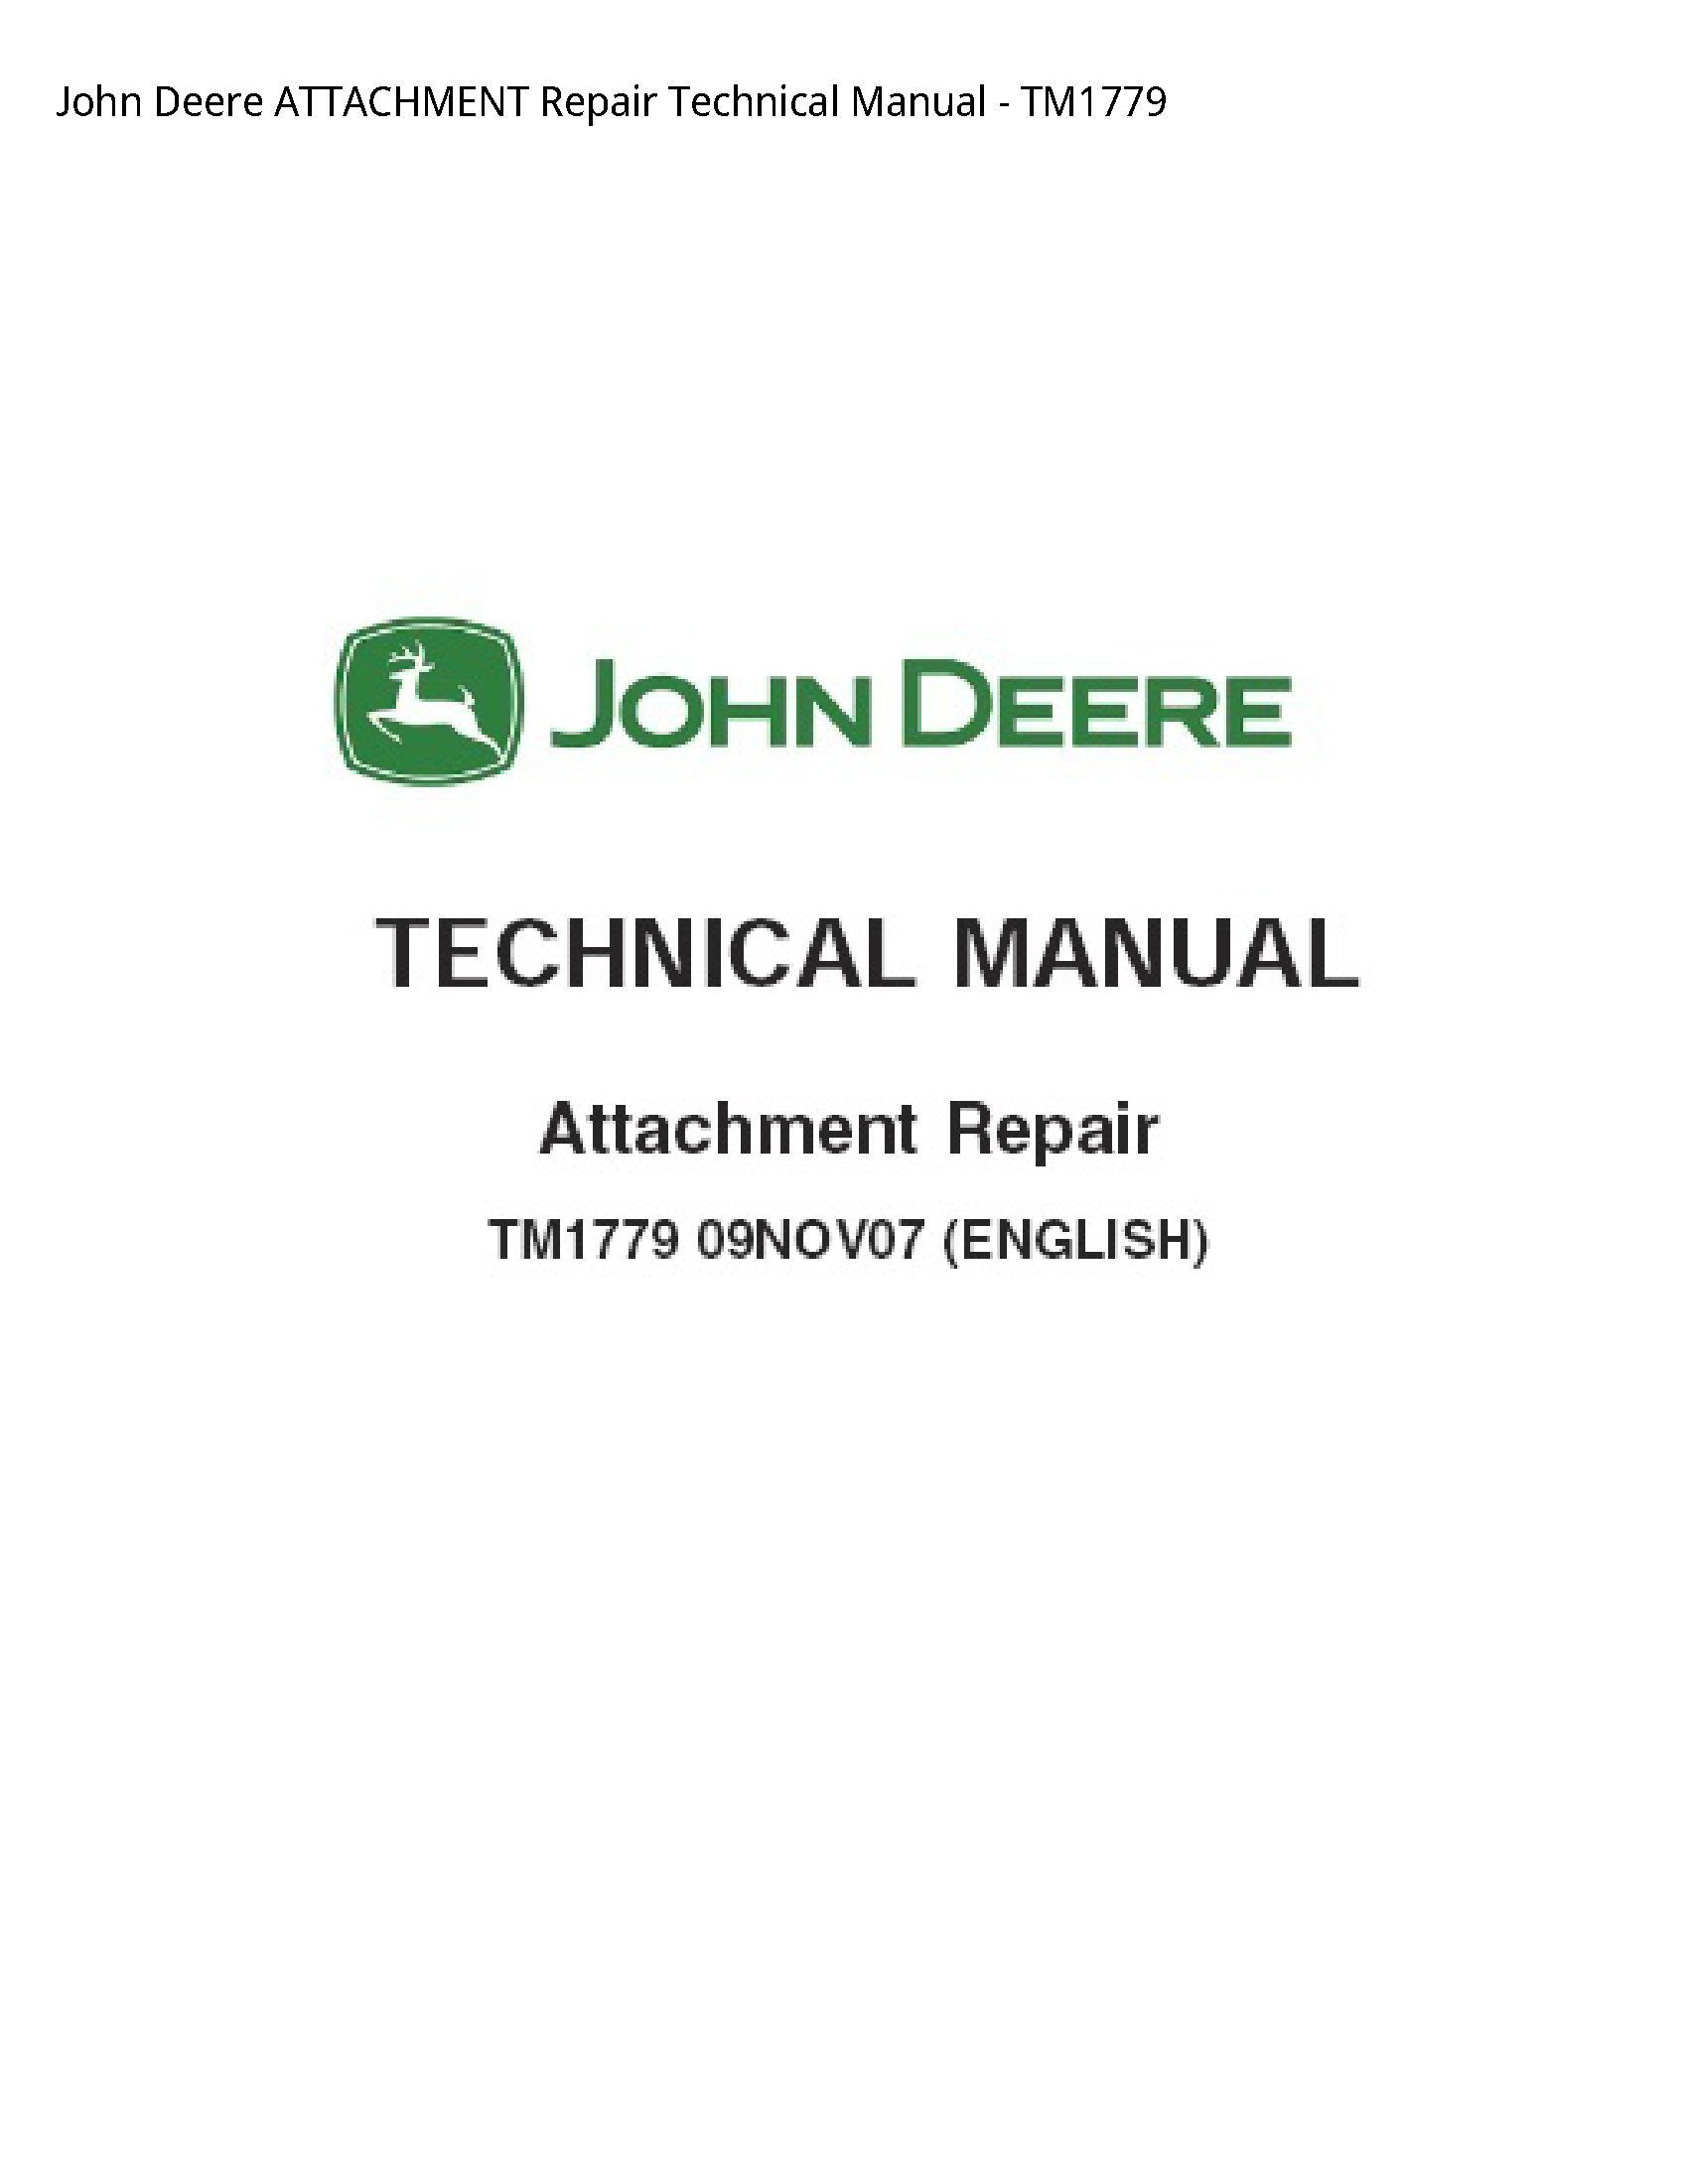 John Deere ATTACHMENT Repair Technical manual